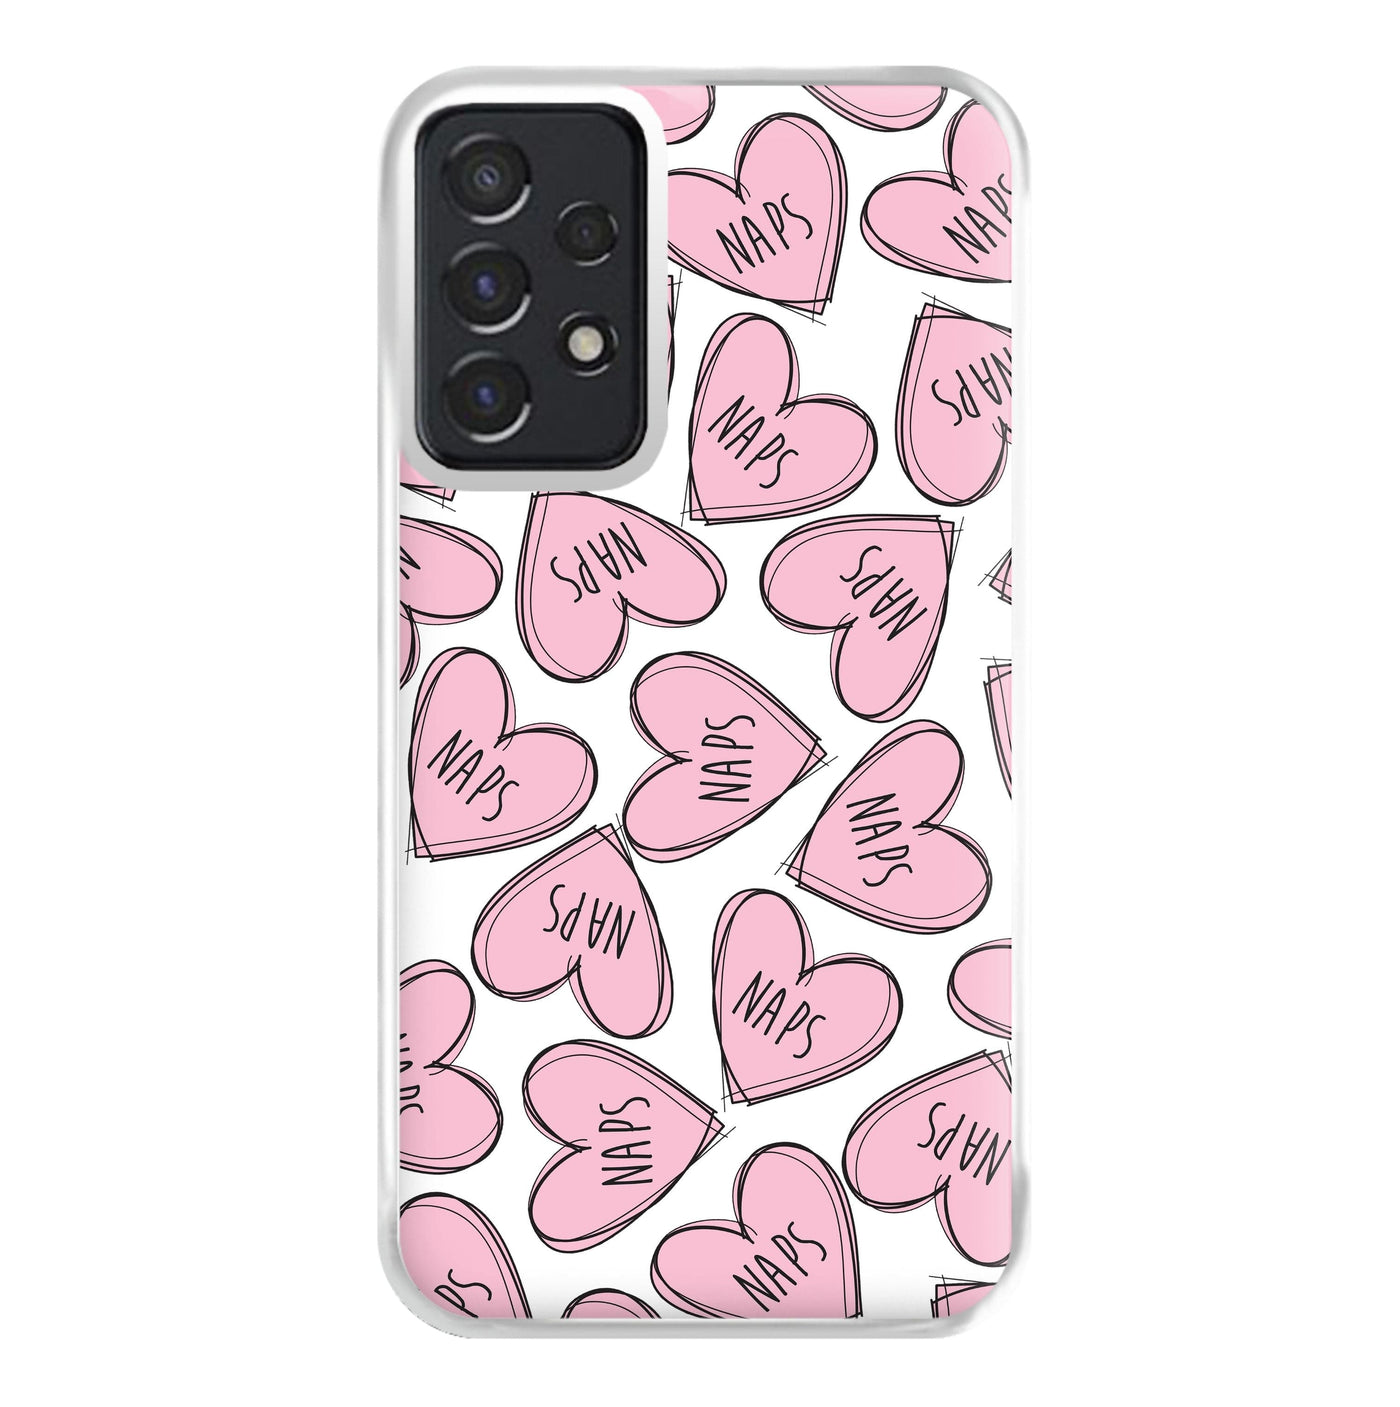 Nap Hearts, Tumblr Inspired Phone Case